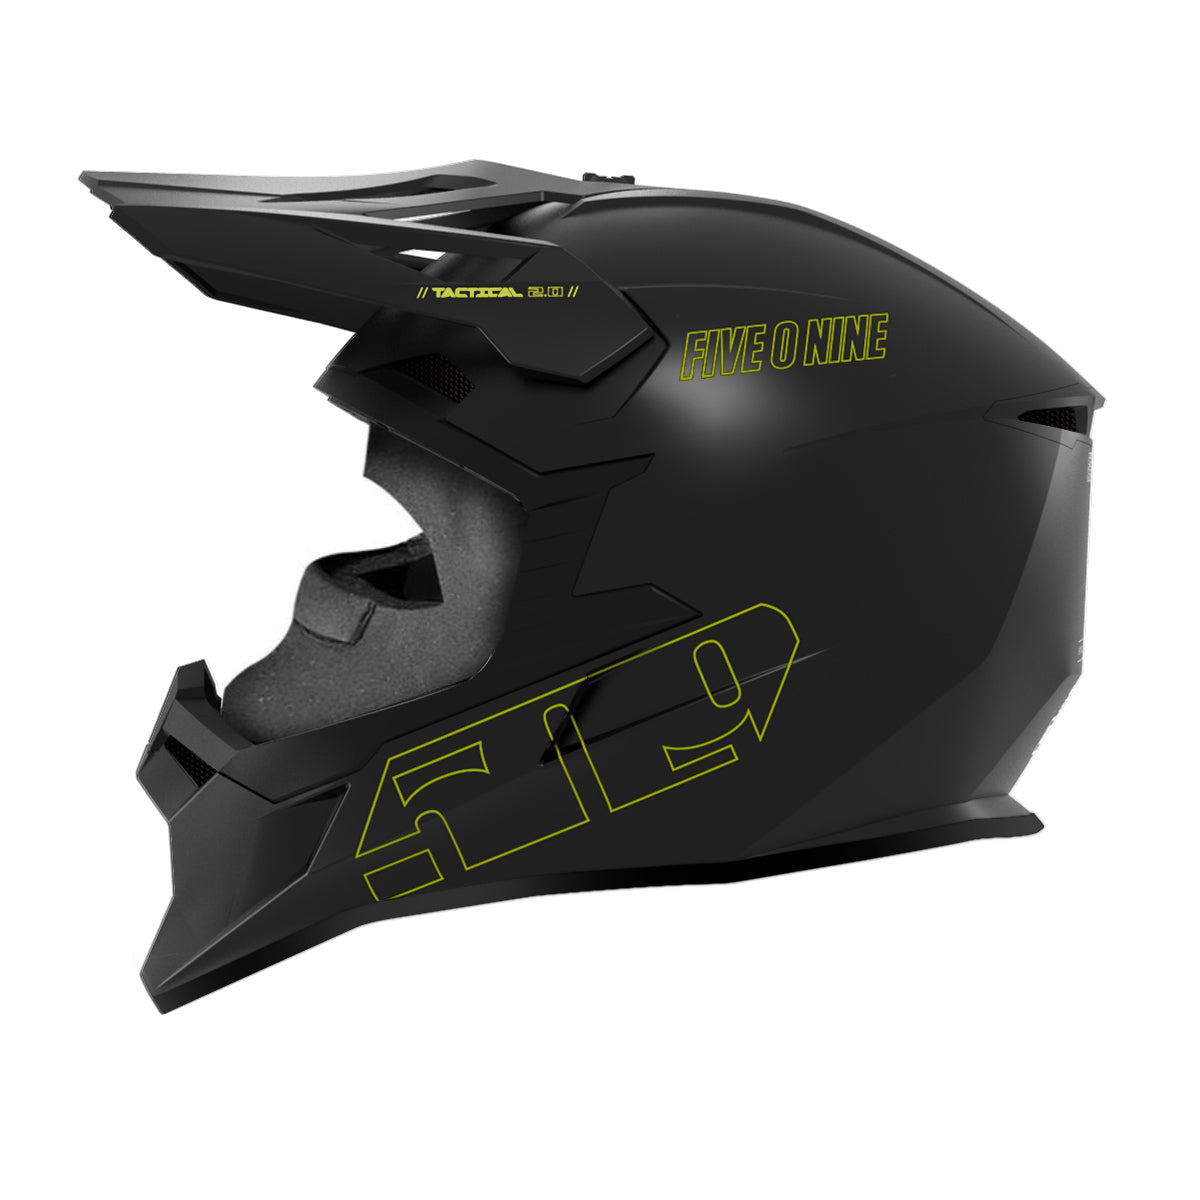 Altitude 2.0 Helmet W23 Black Friday Limited Edition